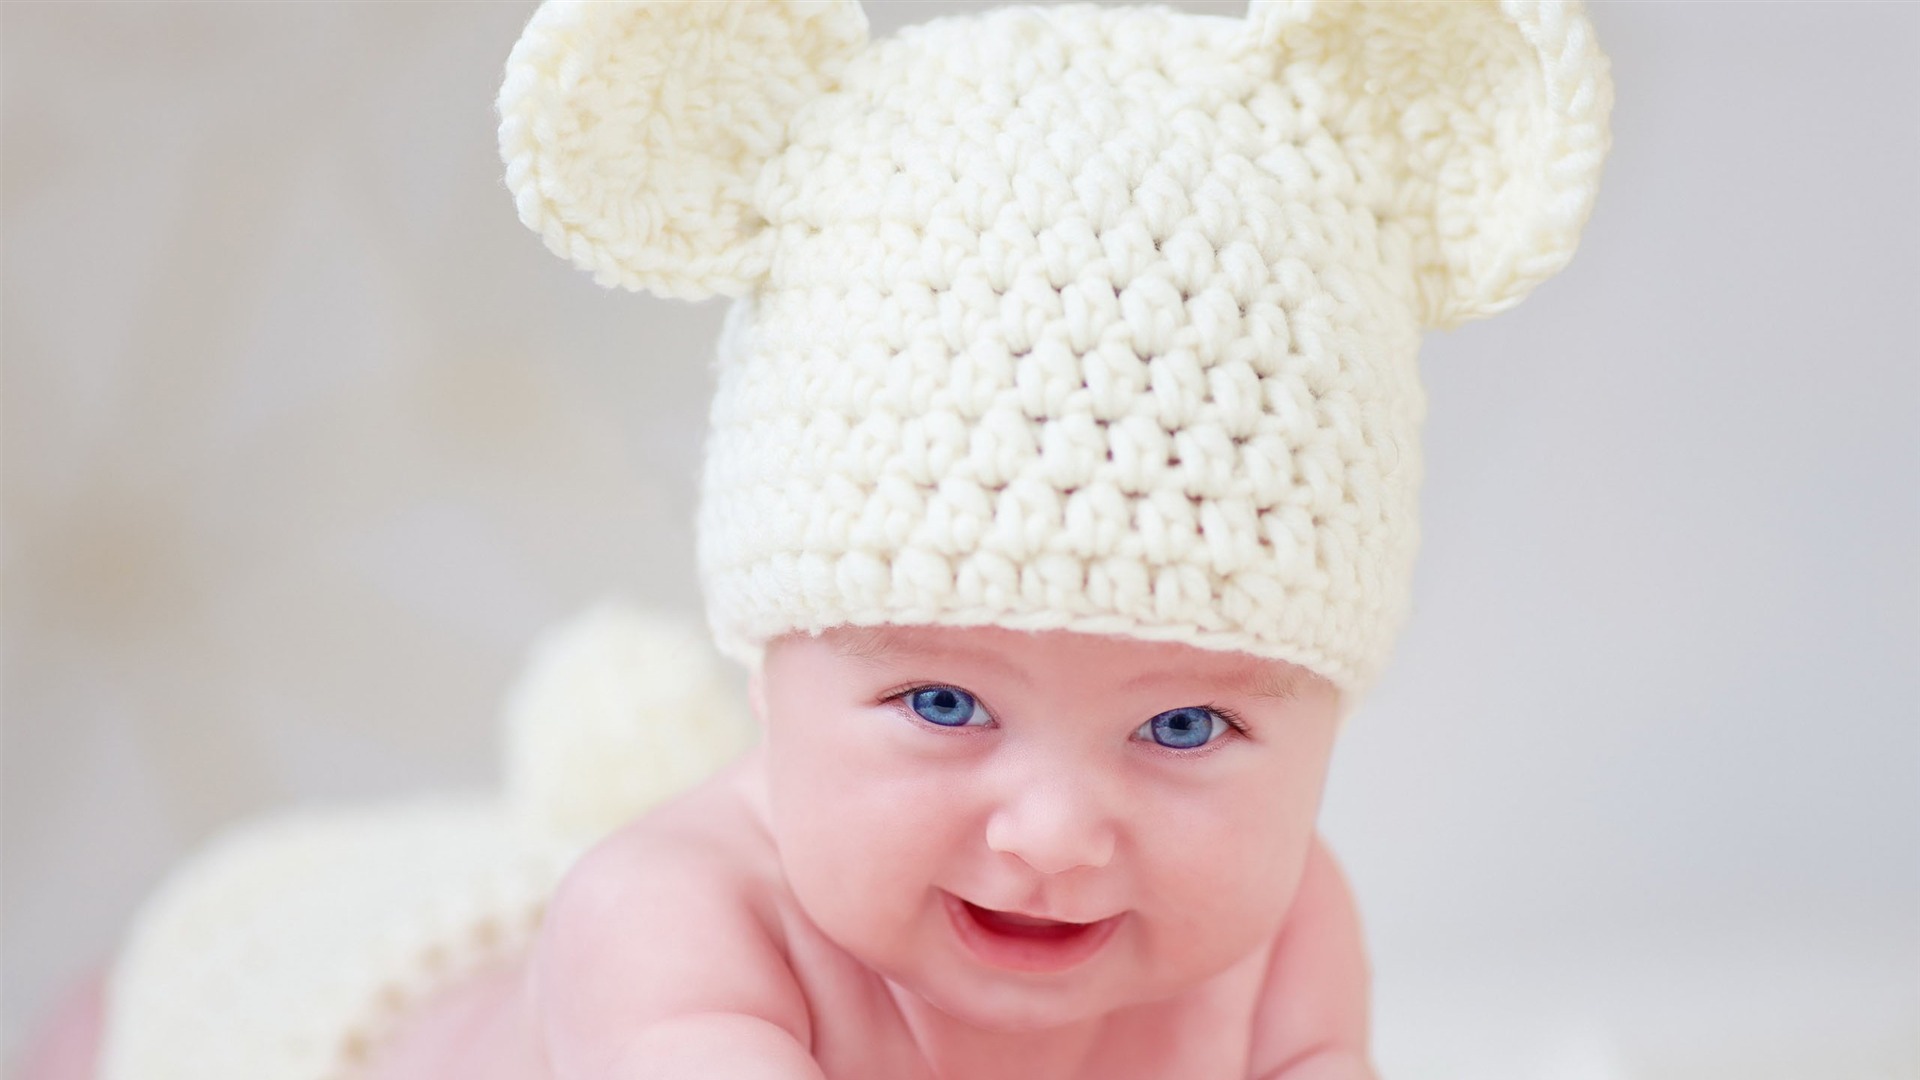  Baby wearing hat